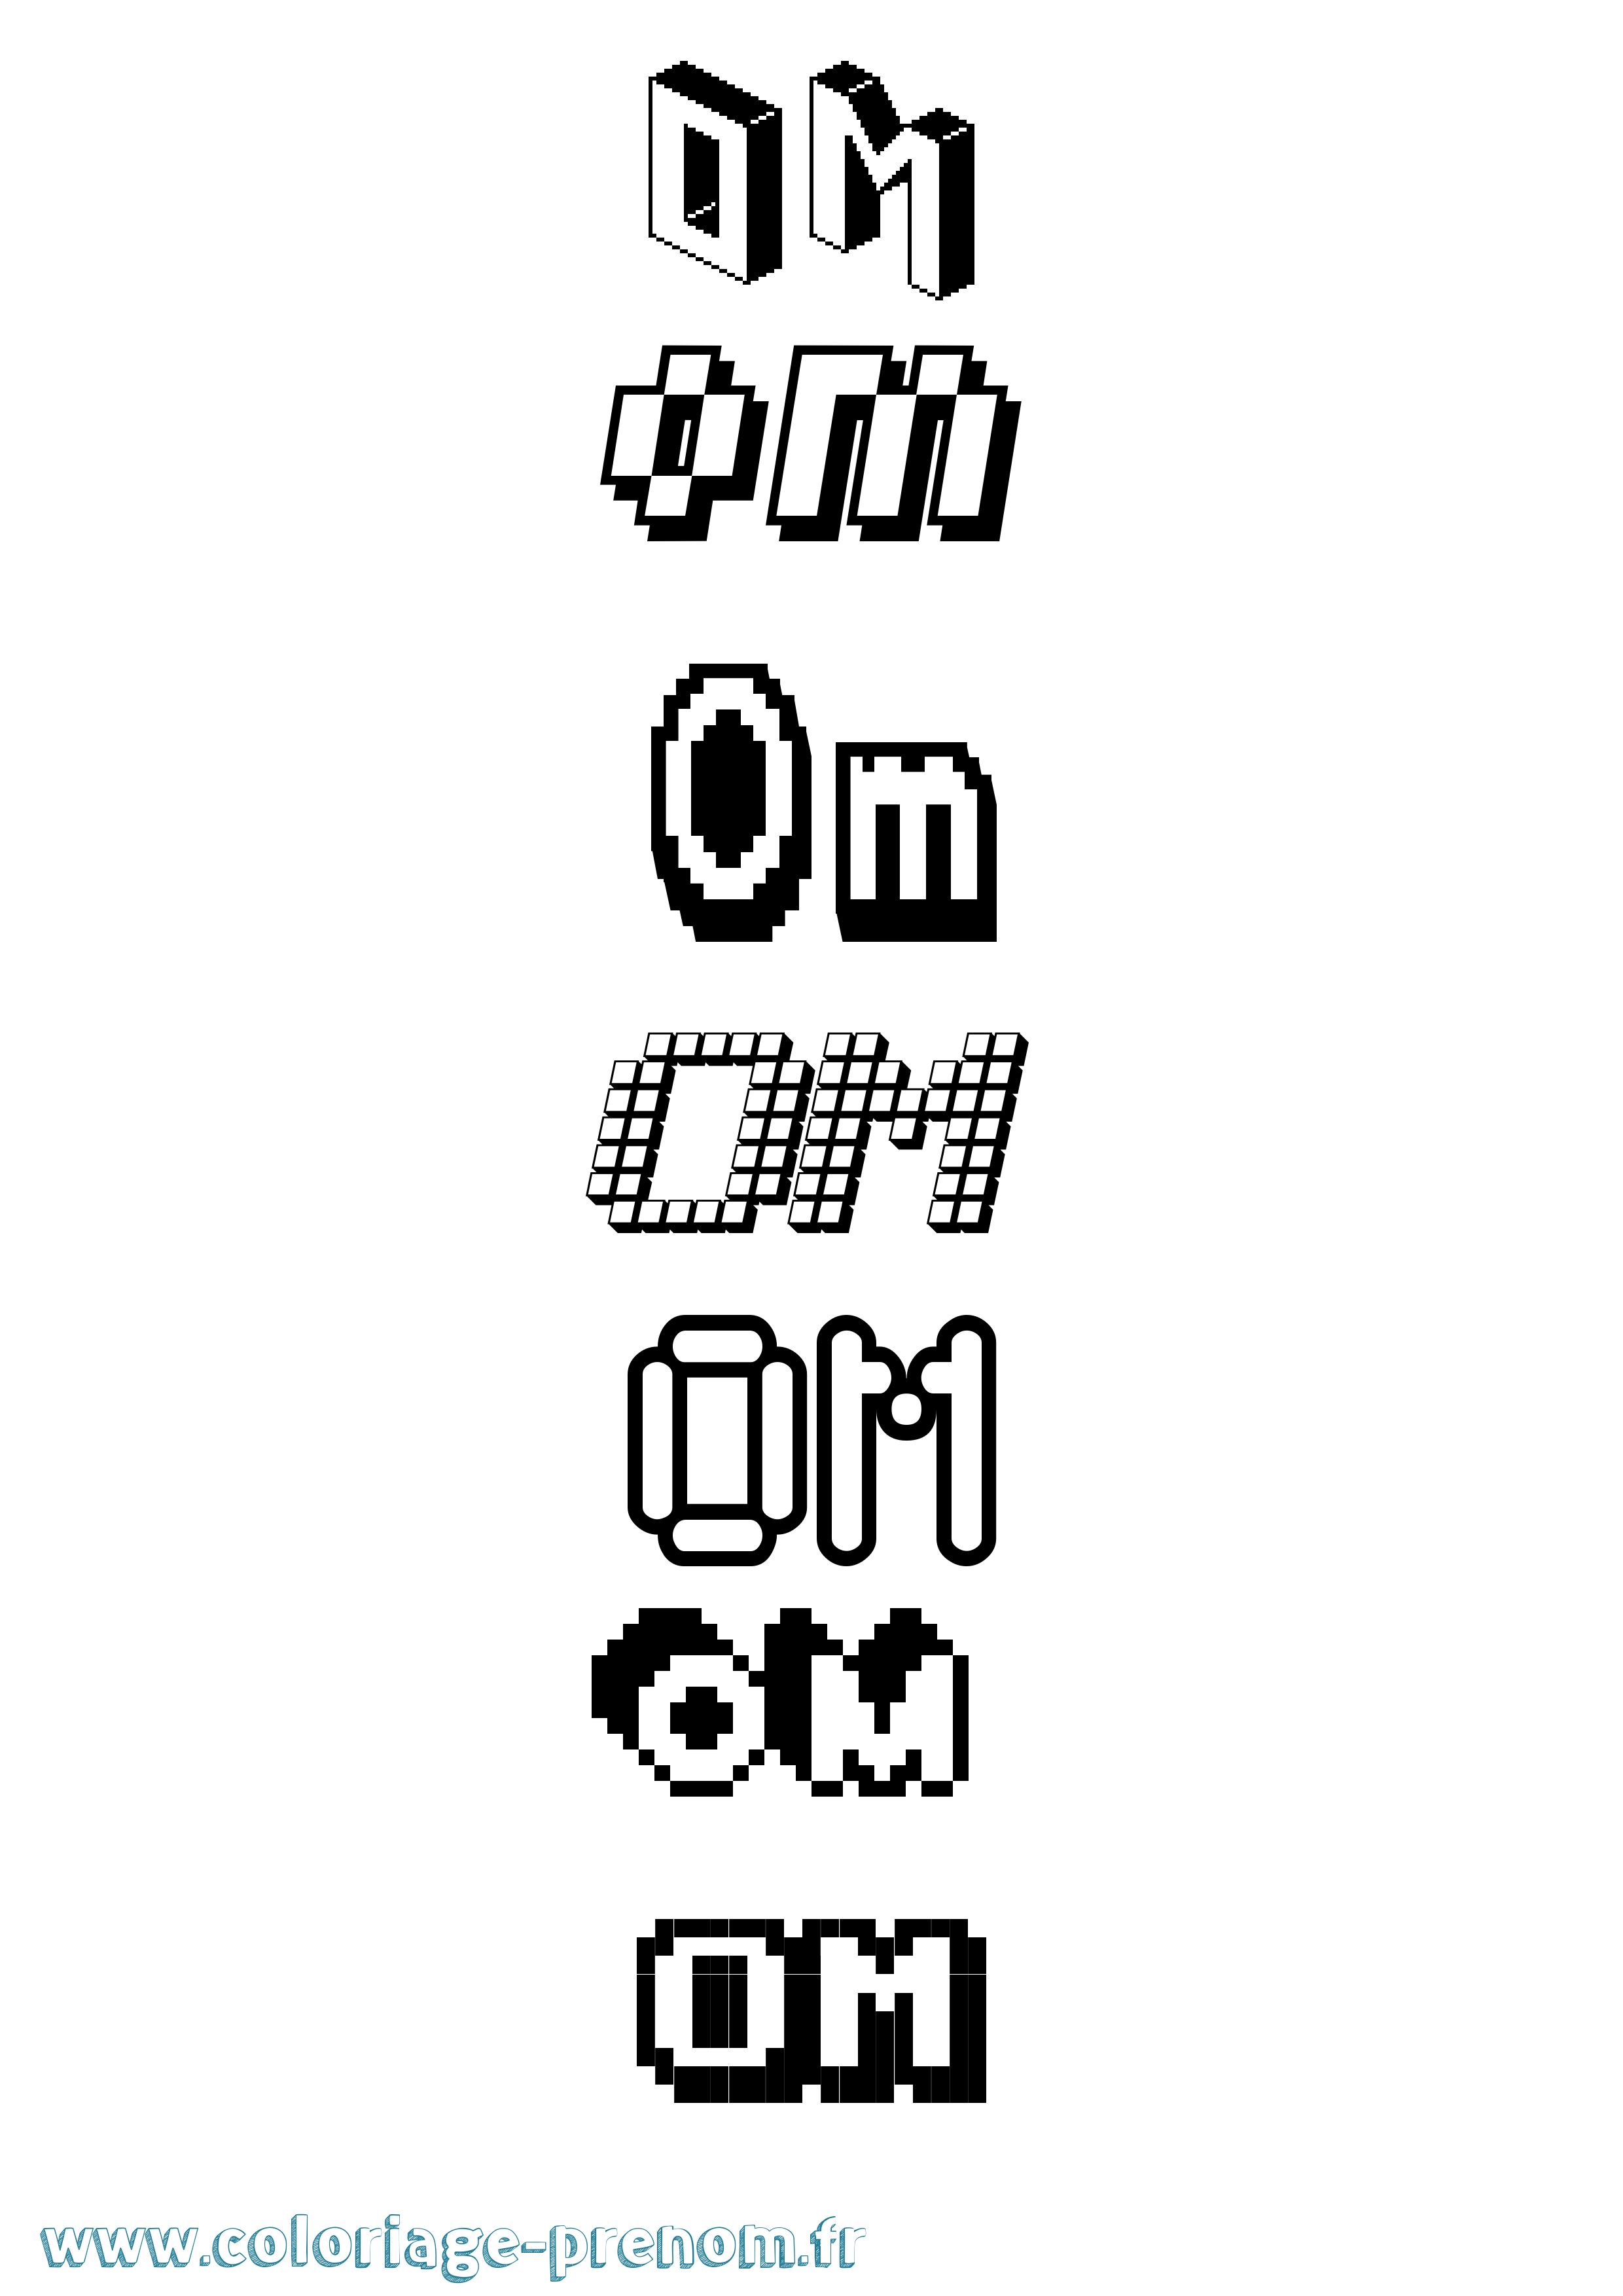 Coloriage prénom Om Pixel